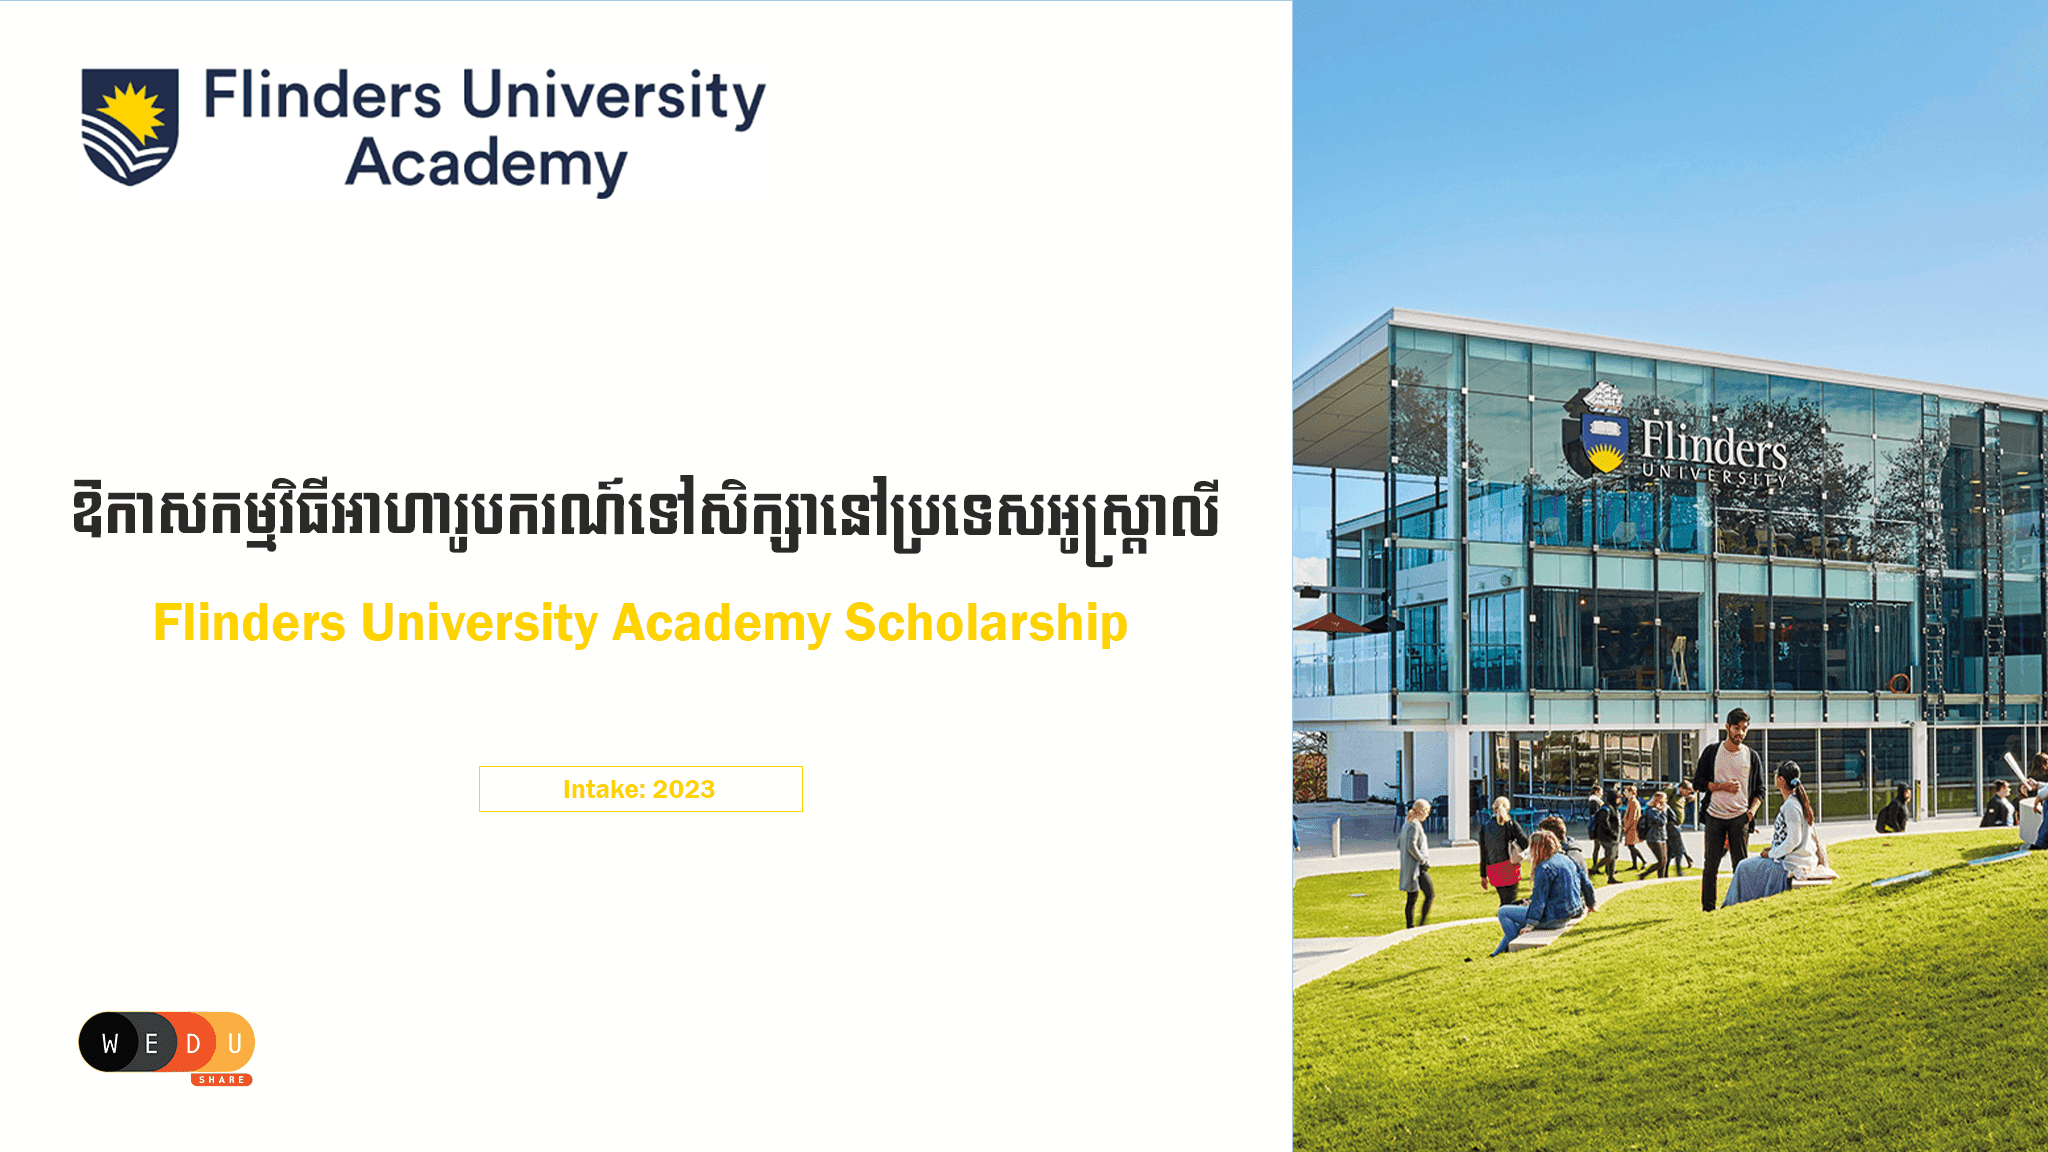 Flinders University Academy Scholarship